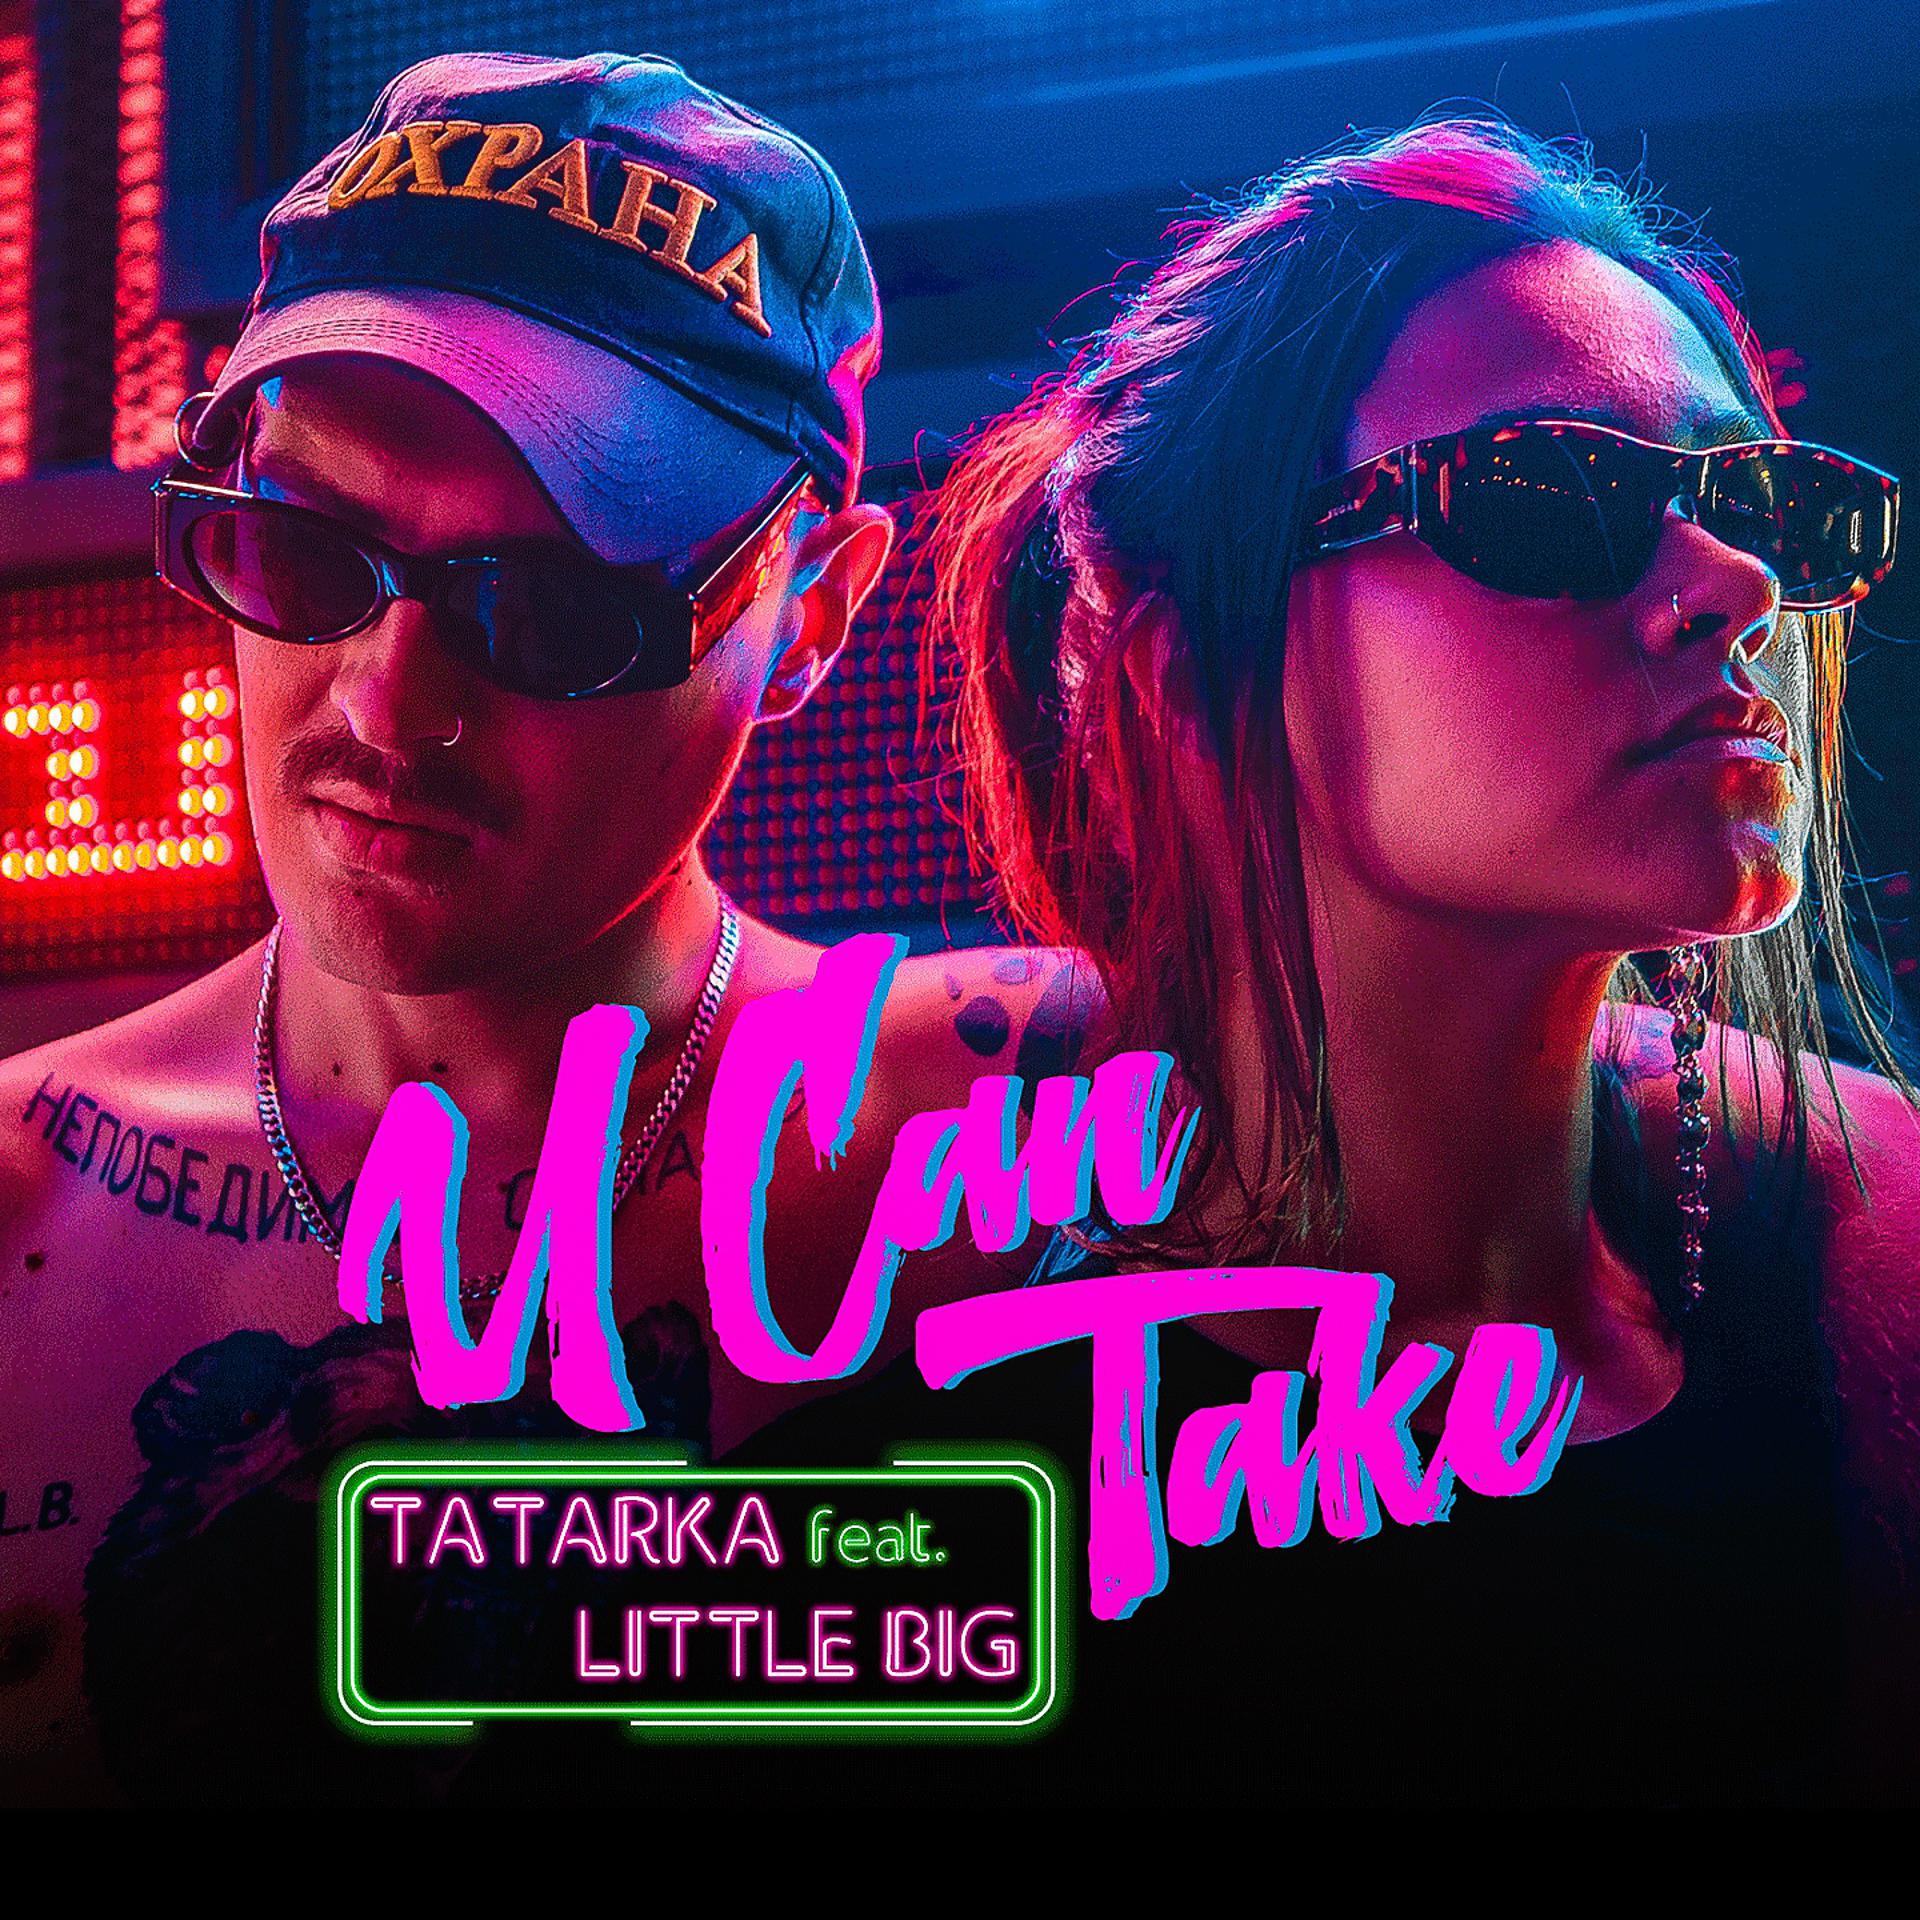 Can take place in the. U can take TATARKA feat. Little big. TATARKA — Алтын обложка. TATARKA little big u can take обложка. Татарка на обложке.